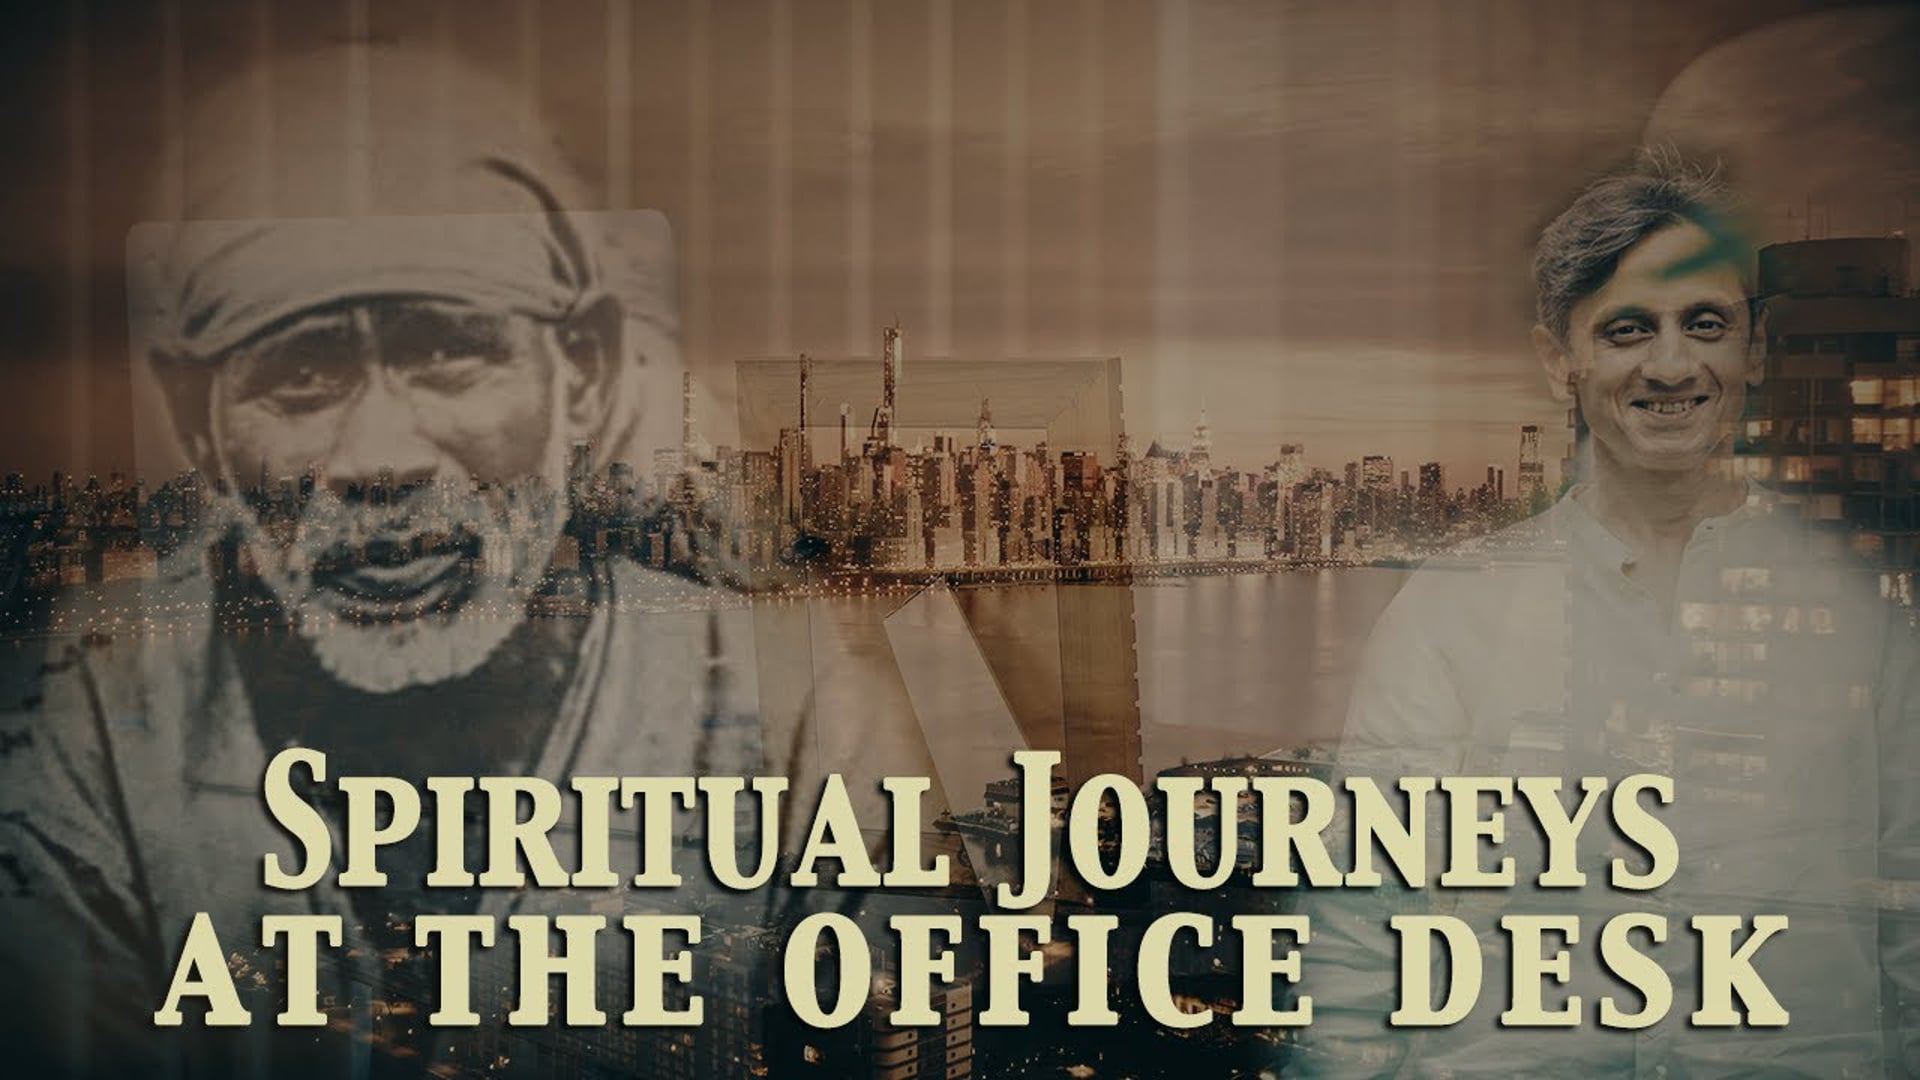 Spiritual Journeys at the Office desk